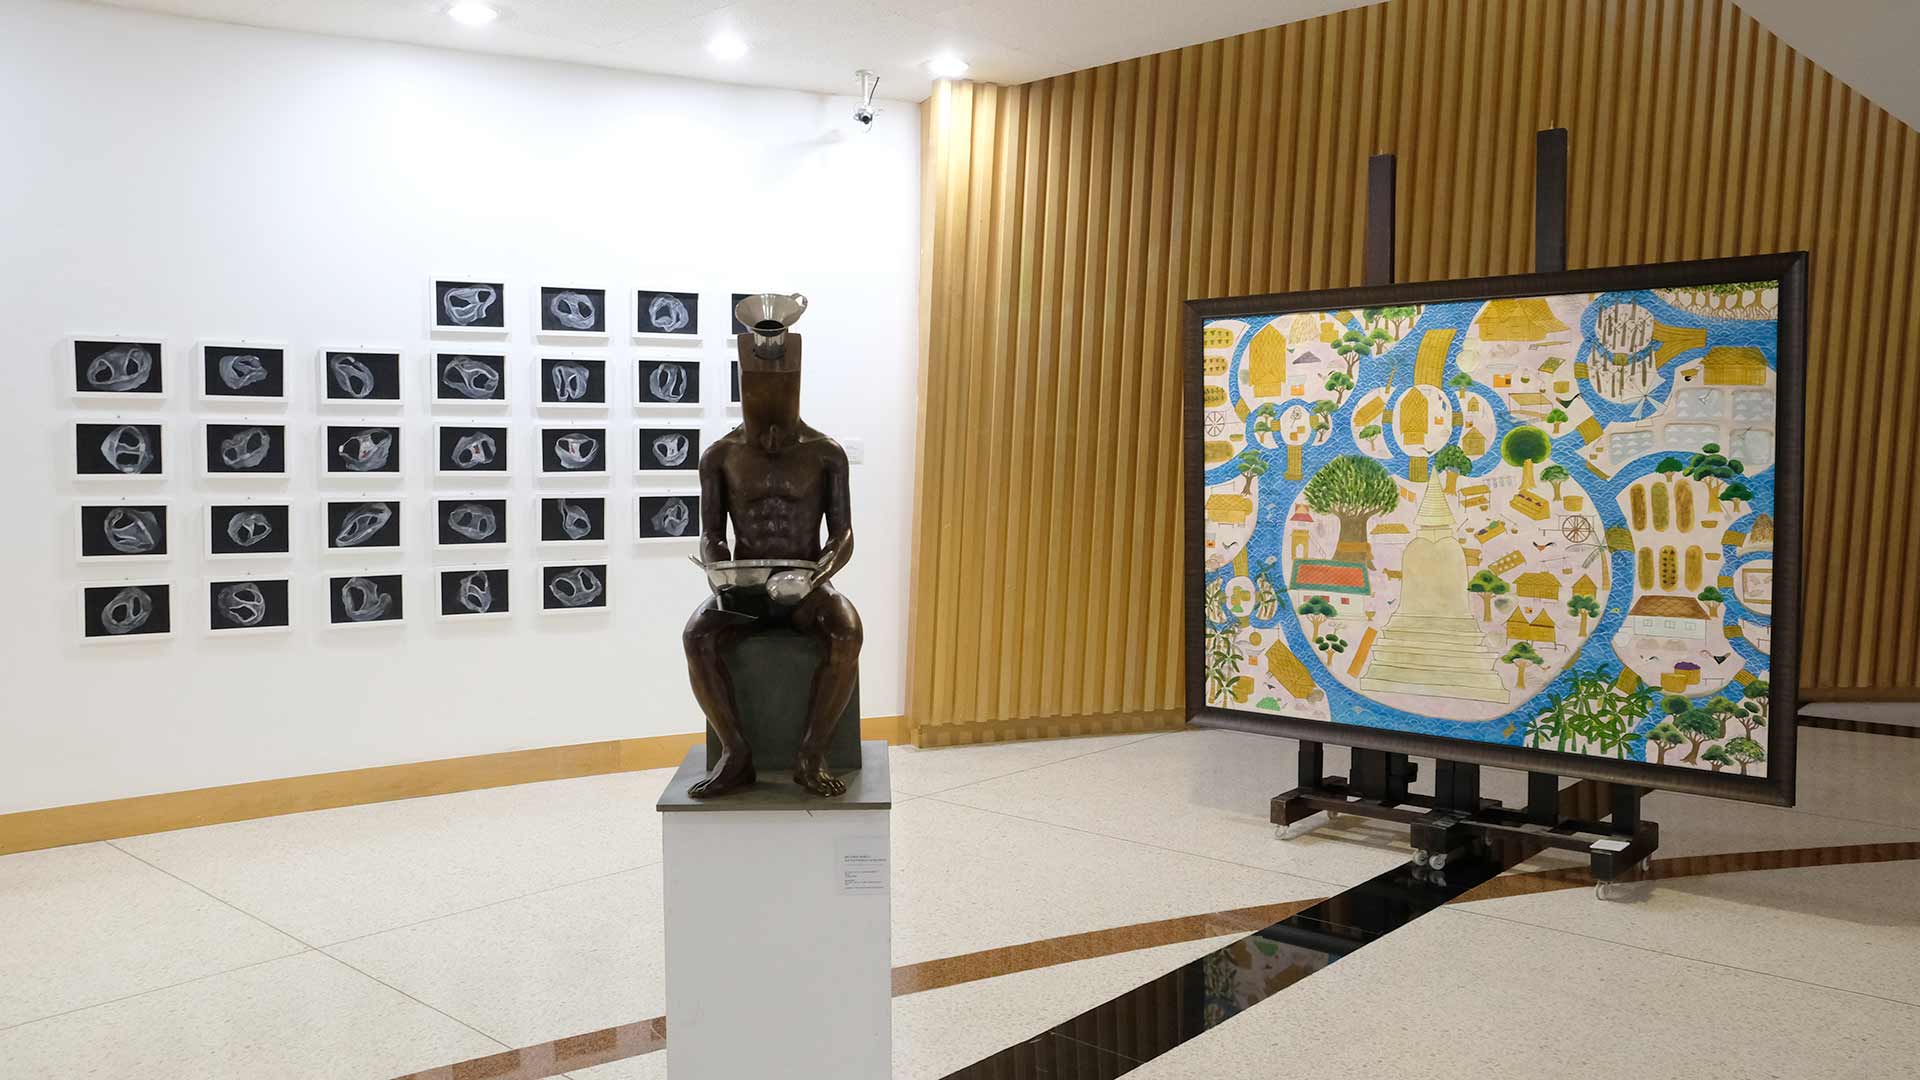 Exhibition Our Shade By Department of Painting, Faculty of Fine and Applied Arts, Burapha University | นิทรรศการ ศิลปนิพนธ์ ตัวตนที่แตกต่าง โดย ภาควิชาจิตรกรรมคณะวิจิตรศิลป์มหาวิทยาลัยบูรพา